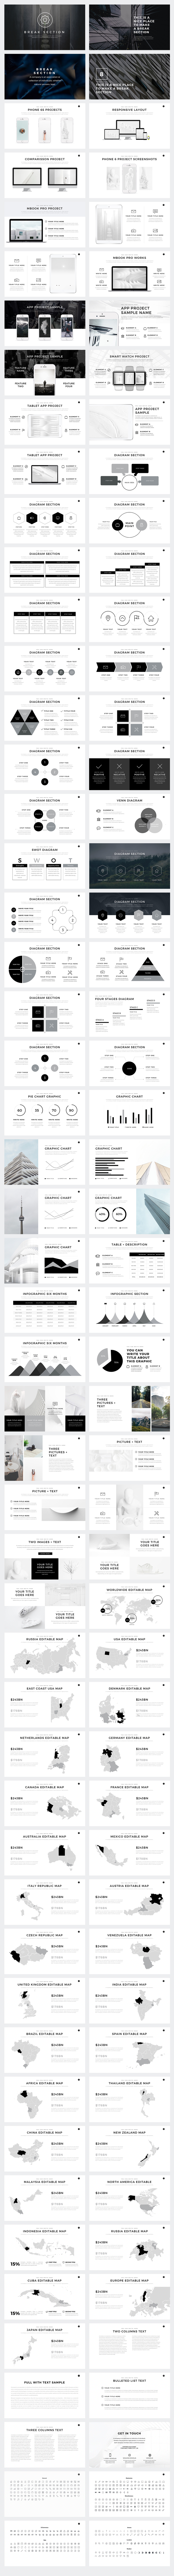 Minimal PowerPoint Template louis twelve infographic portfolio clean web layout UIX PPT PPTX Free Powerpoint Template business report